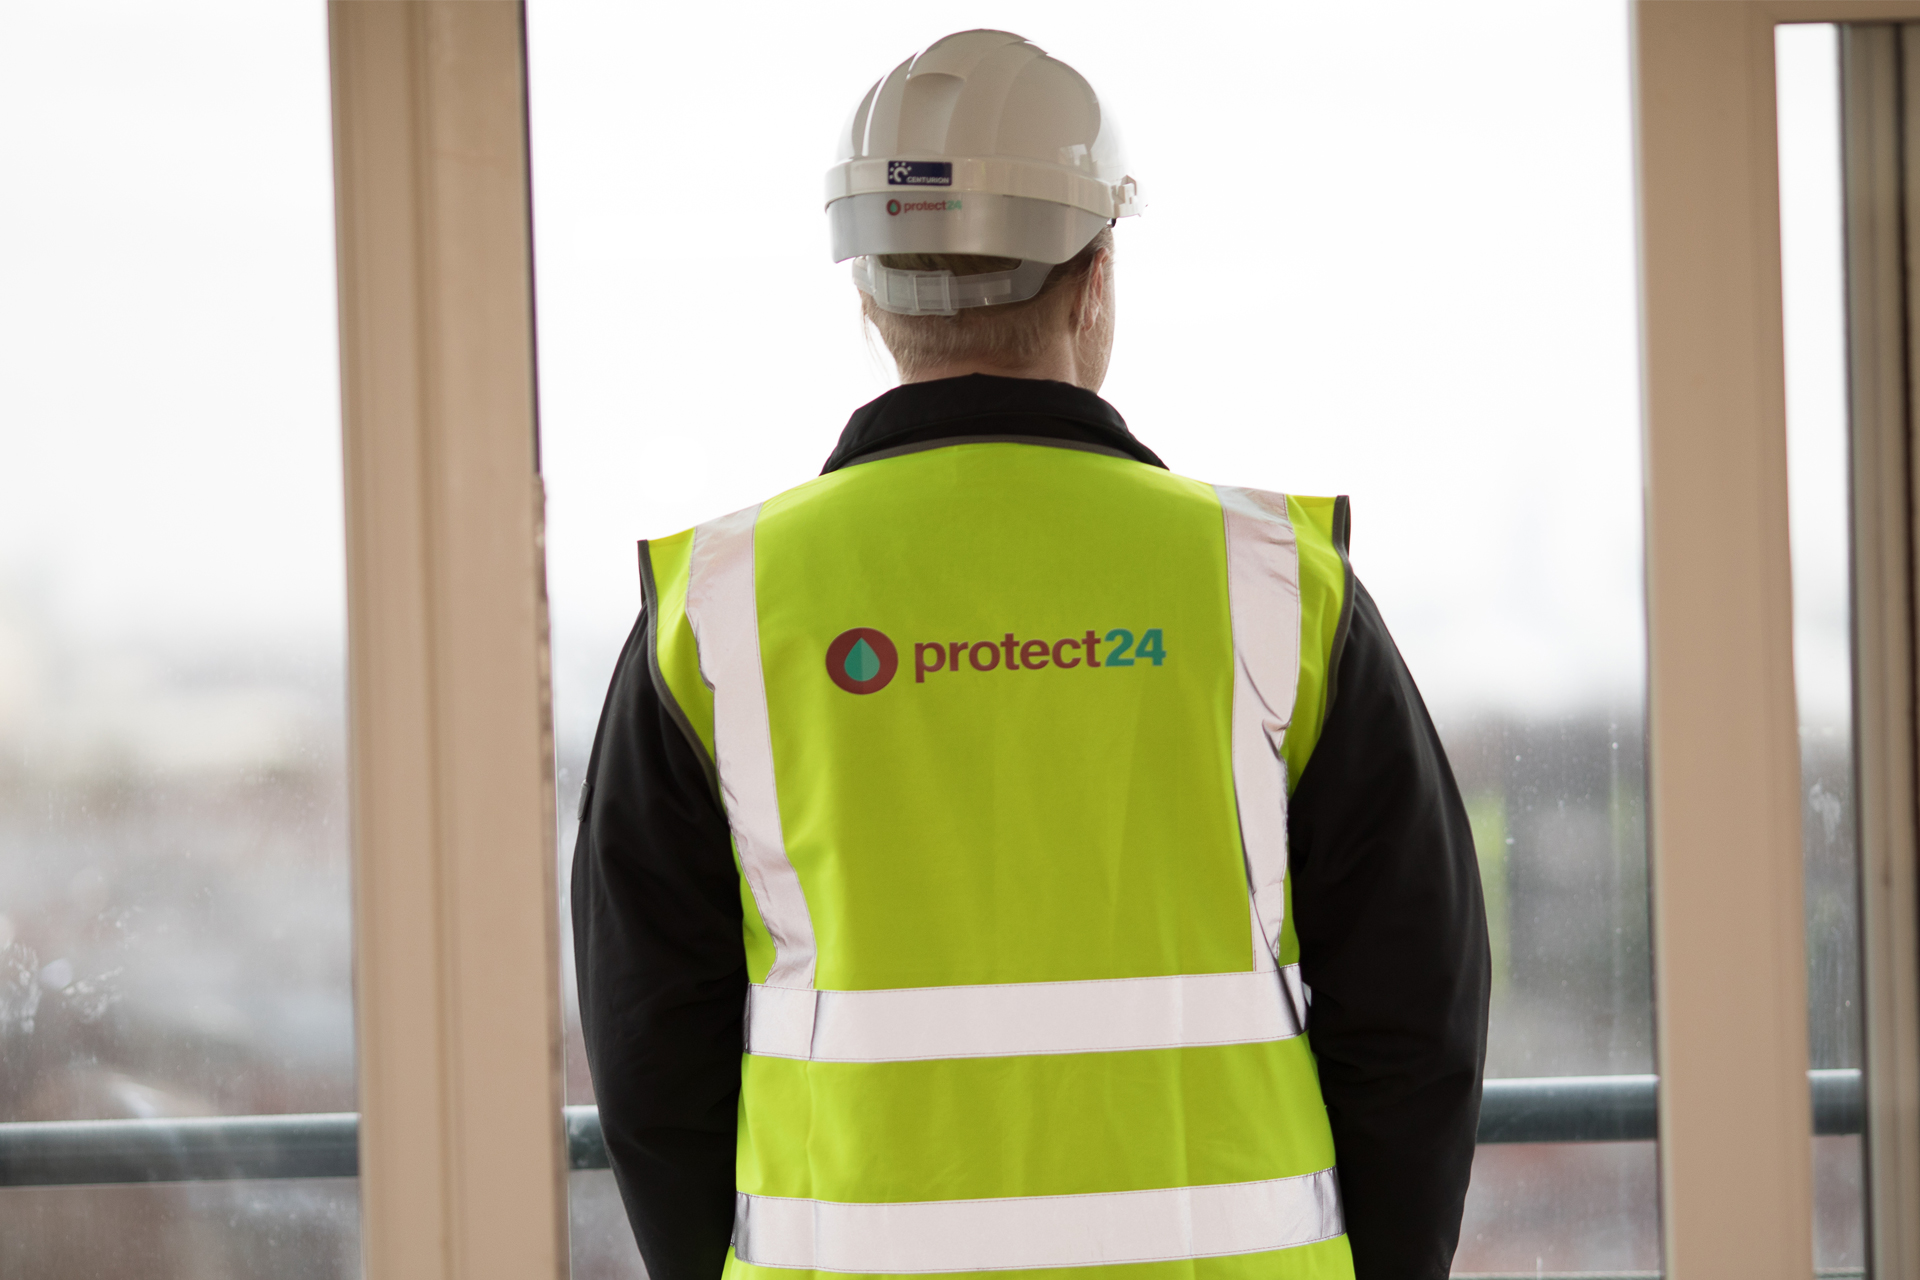 Protect24 Complete £5 million Sprinkler Retrofit Install